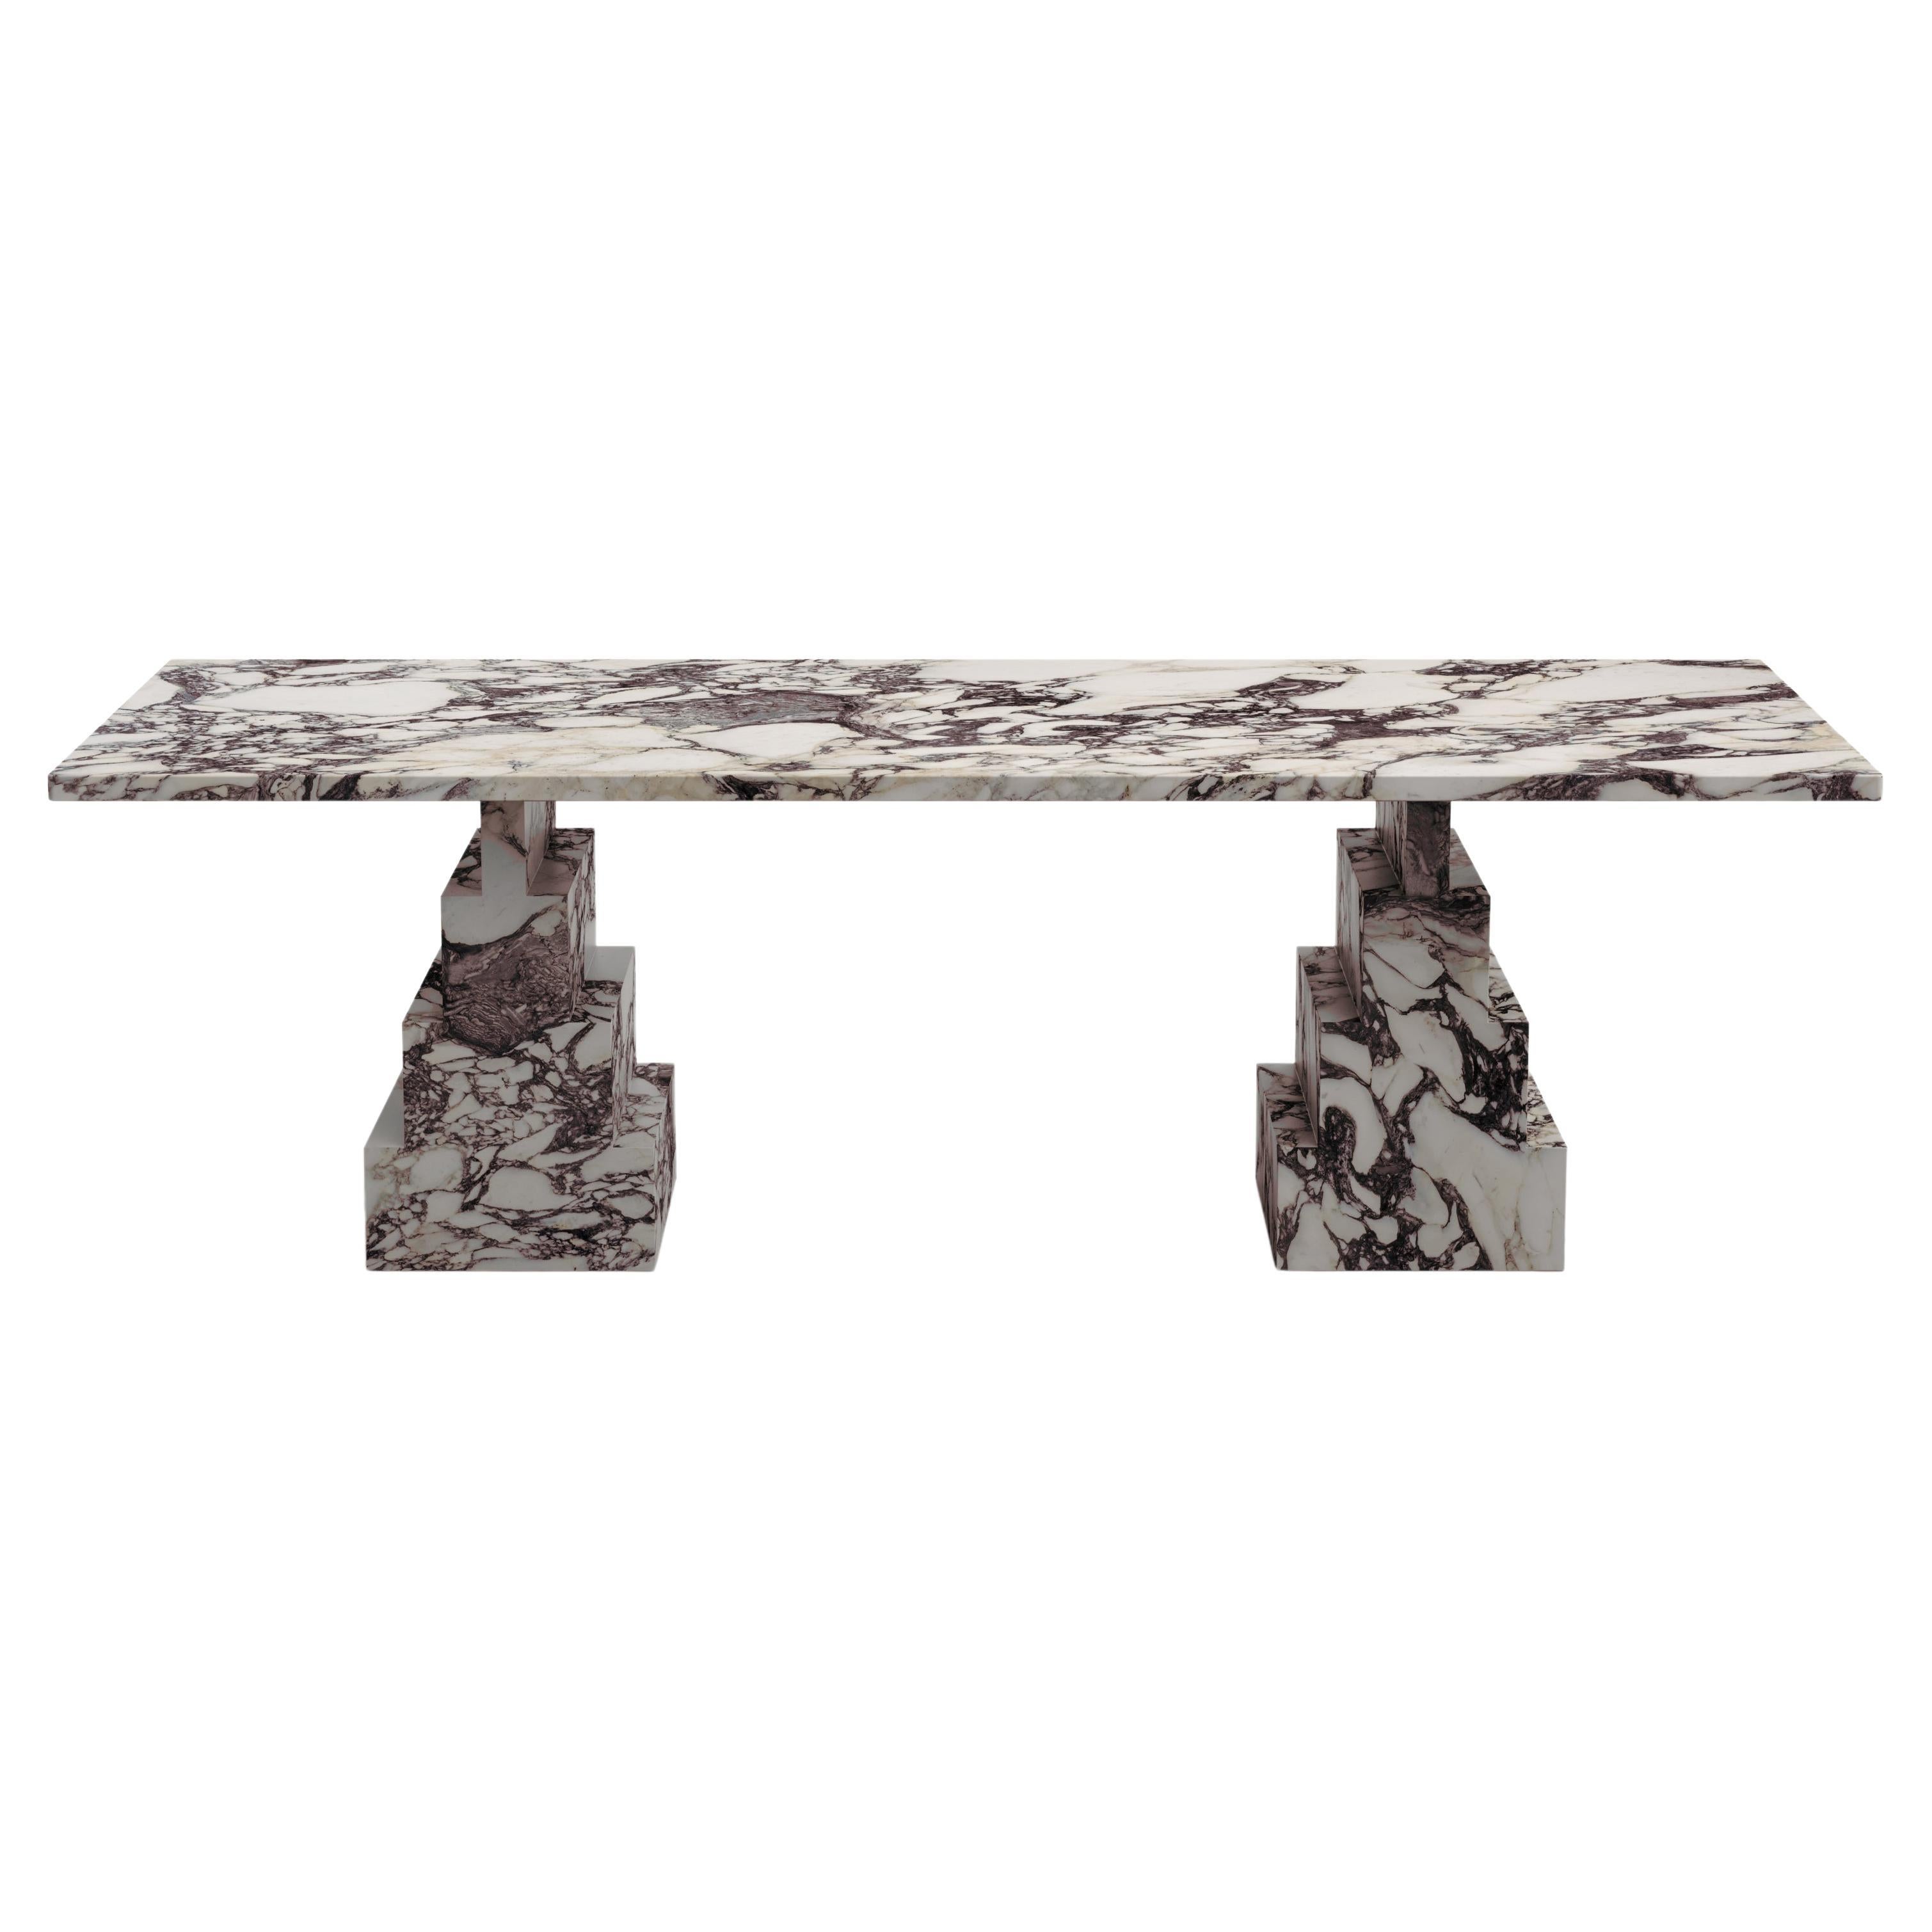 NORDST NIKO Dining Table, Italian Calacatta Marble, Danish Modern Design For Sale